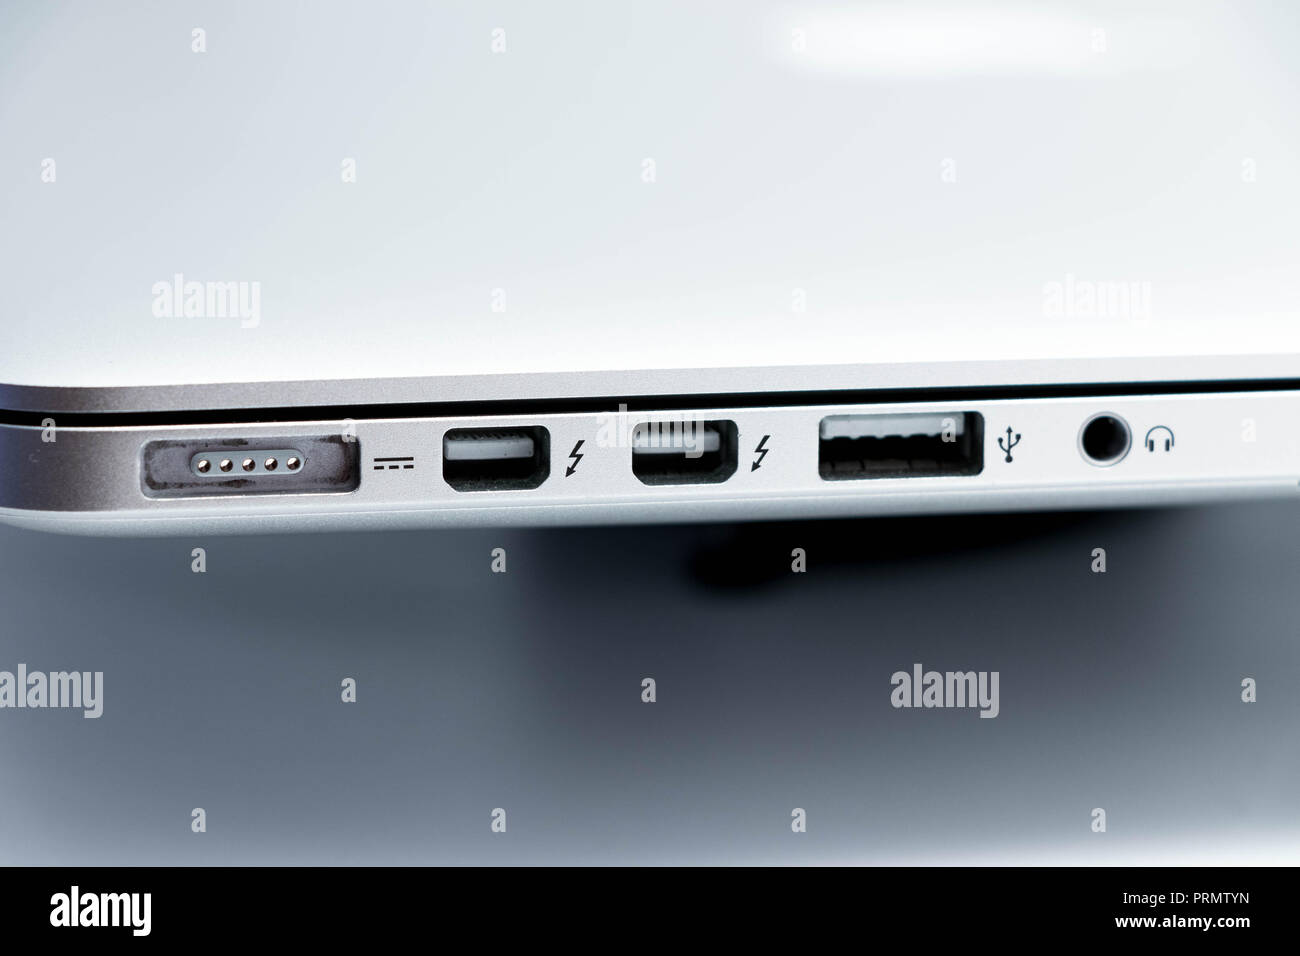 taal jam Reserve Computer Laptop apple MacBook Pro usb HDMI port Stock Photo - Alamy